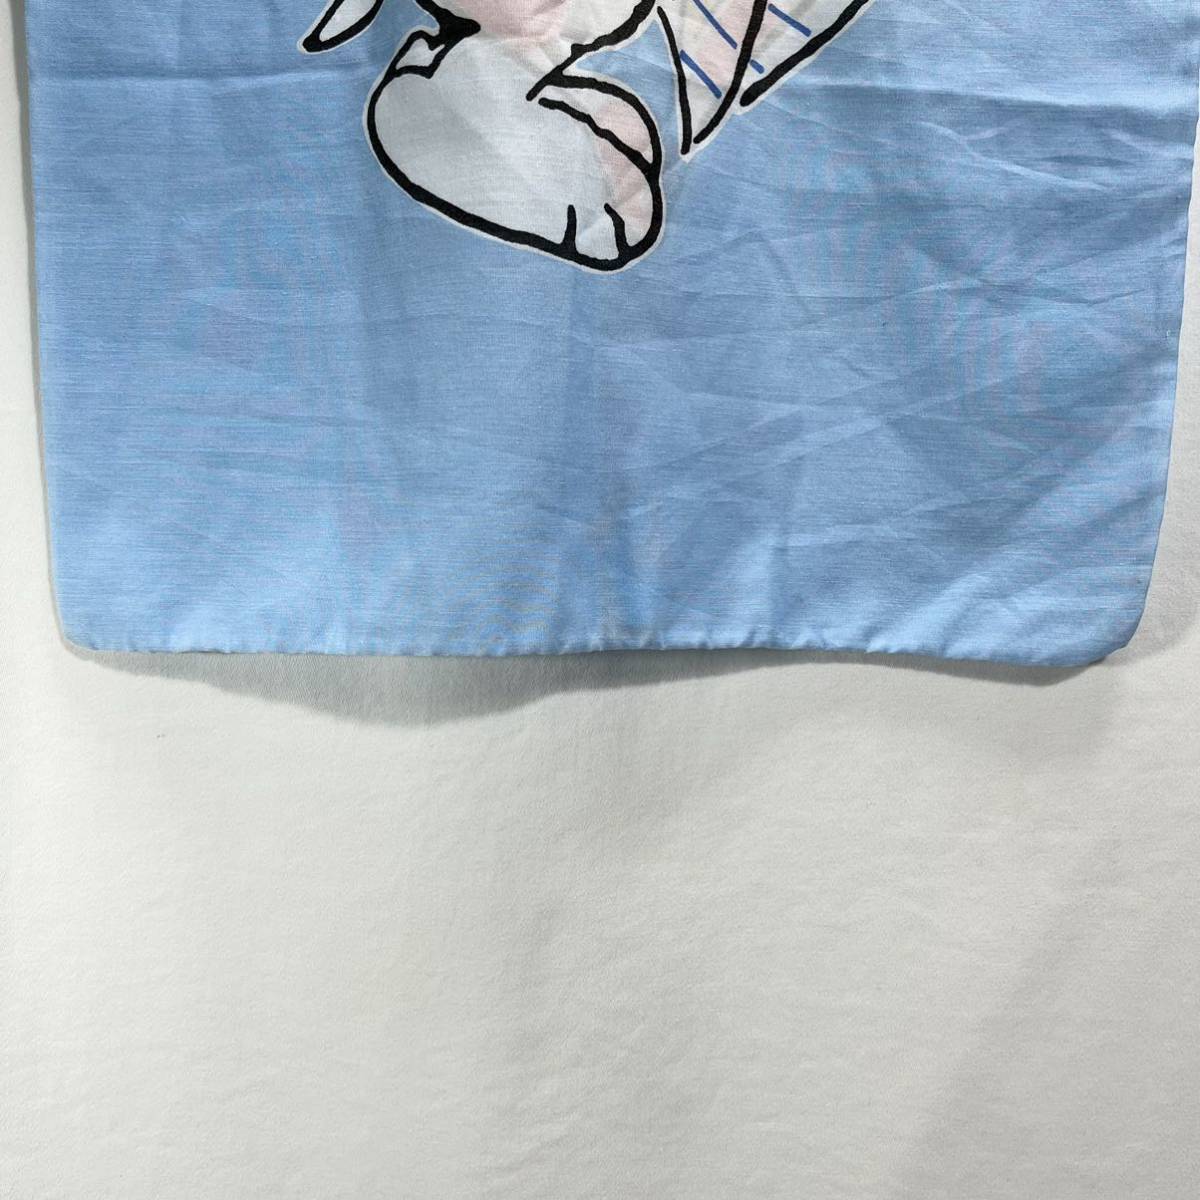 # Vintage USA производства Snoopy иллюстрации подушка покрытие pillow кейс бледно-голубой American Casual PEANUTS 6ap26 #